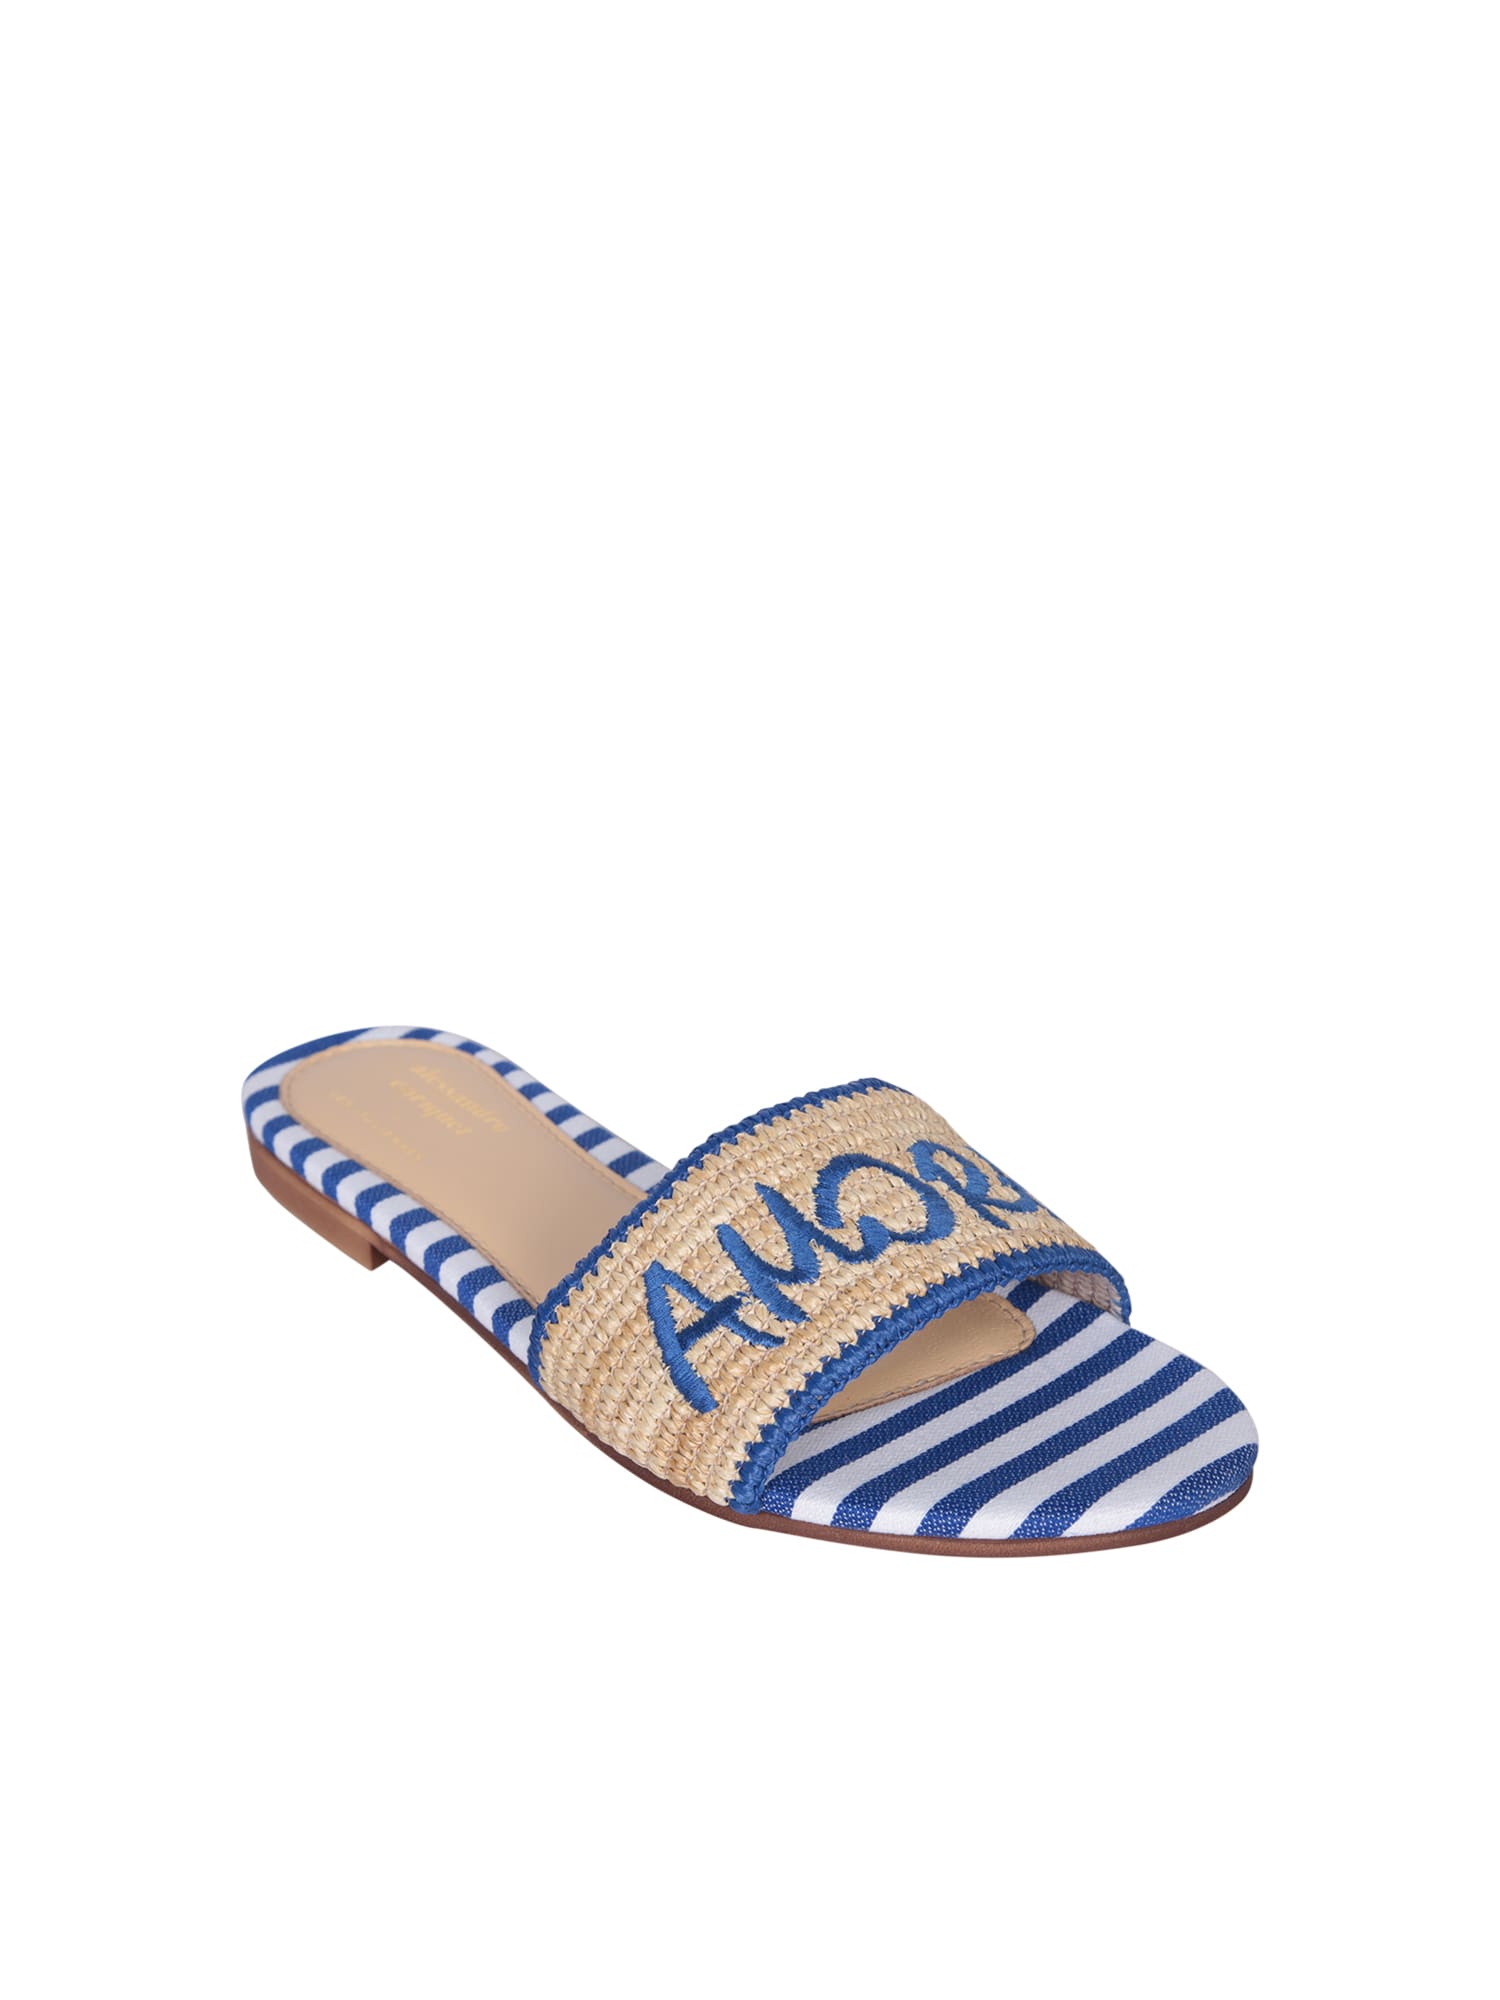 Shop Alessandro Enriquez Amore Bei Blu Raffia And Fabric Sandals In Beige